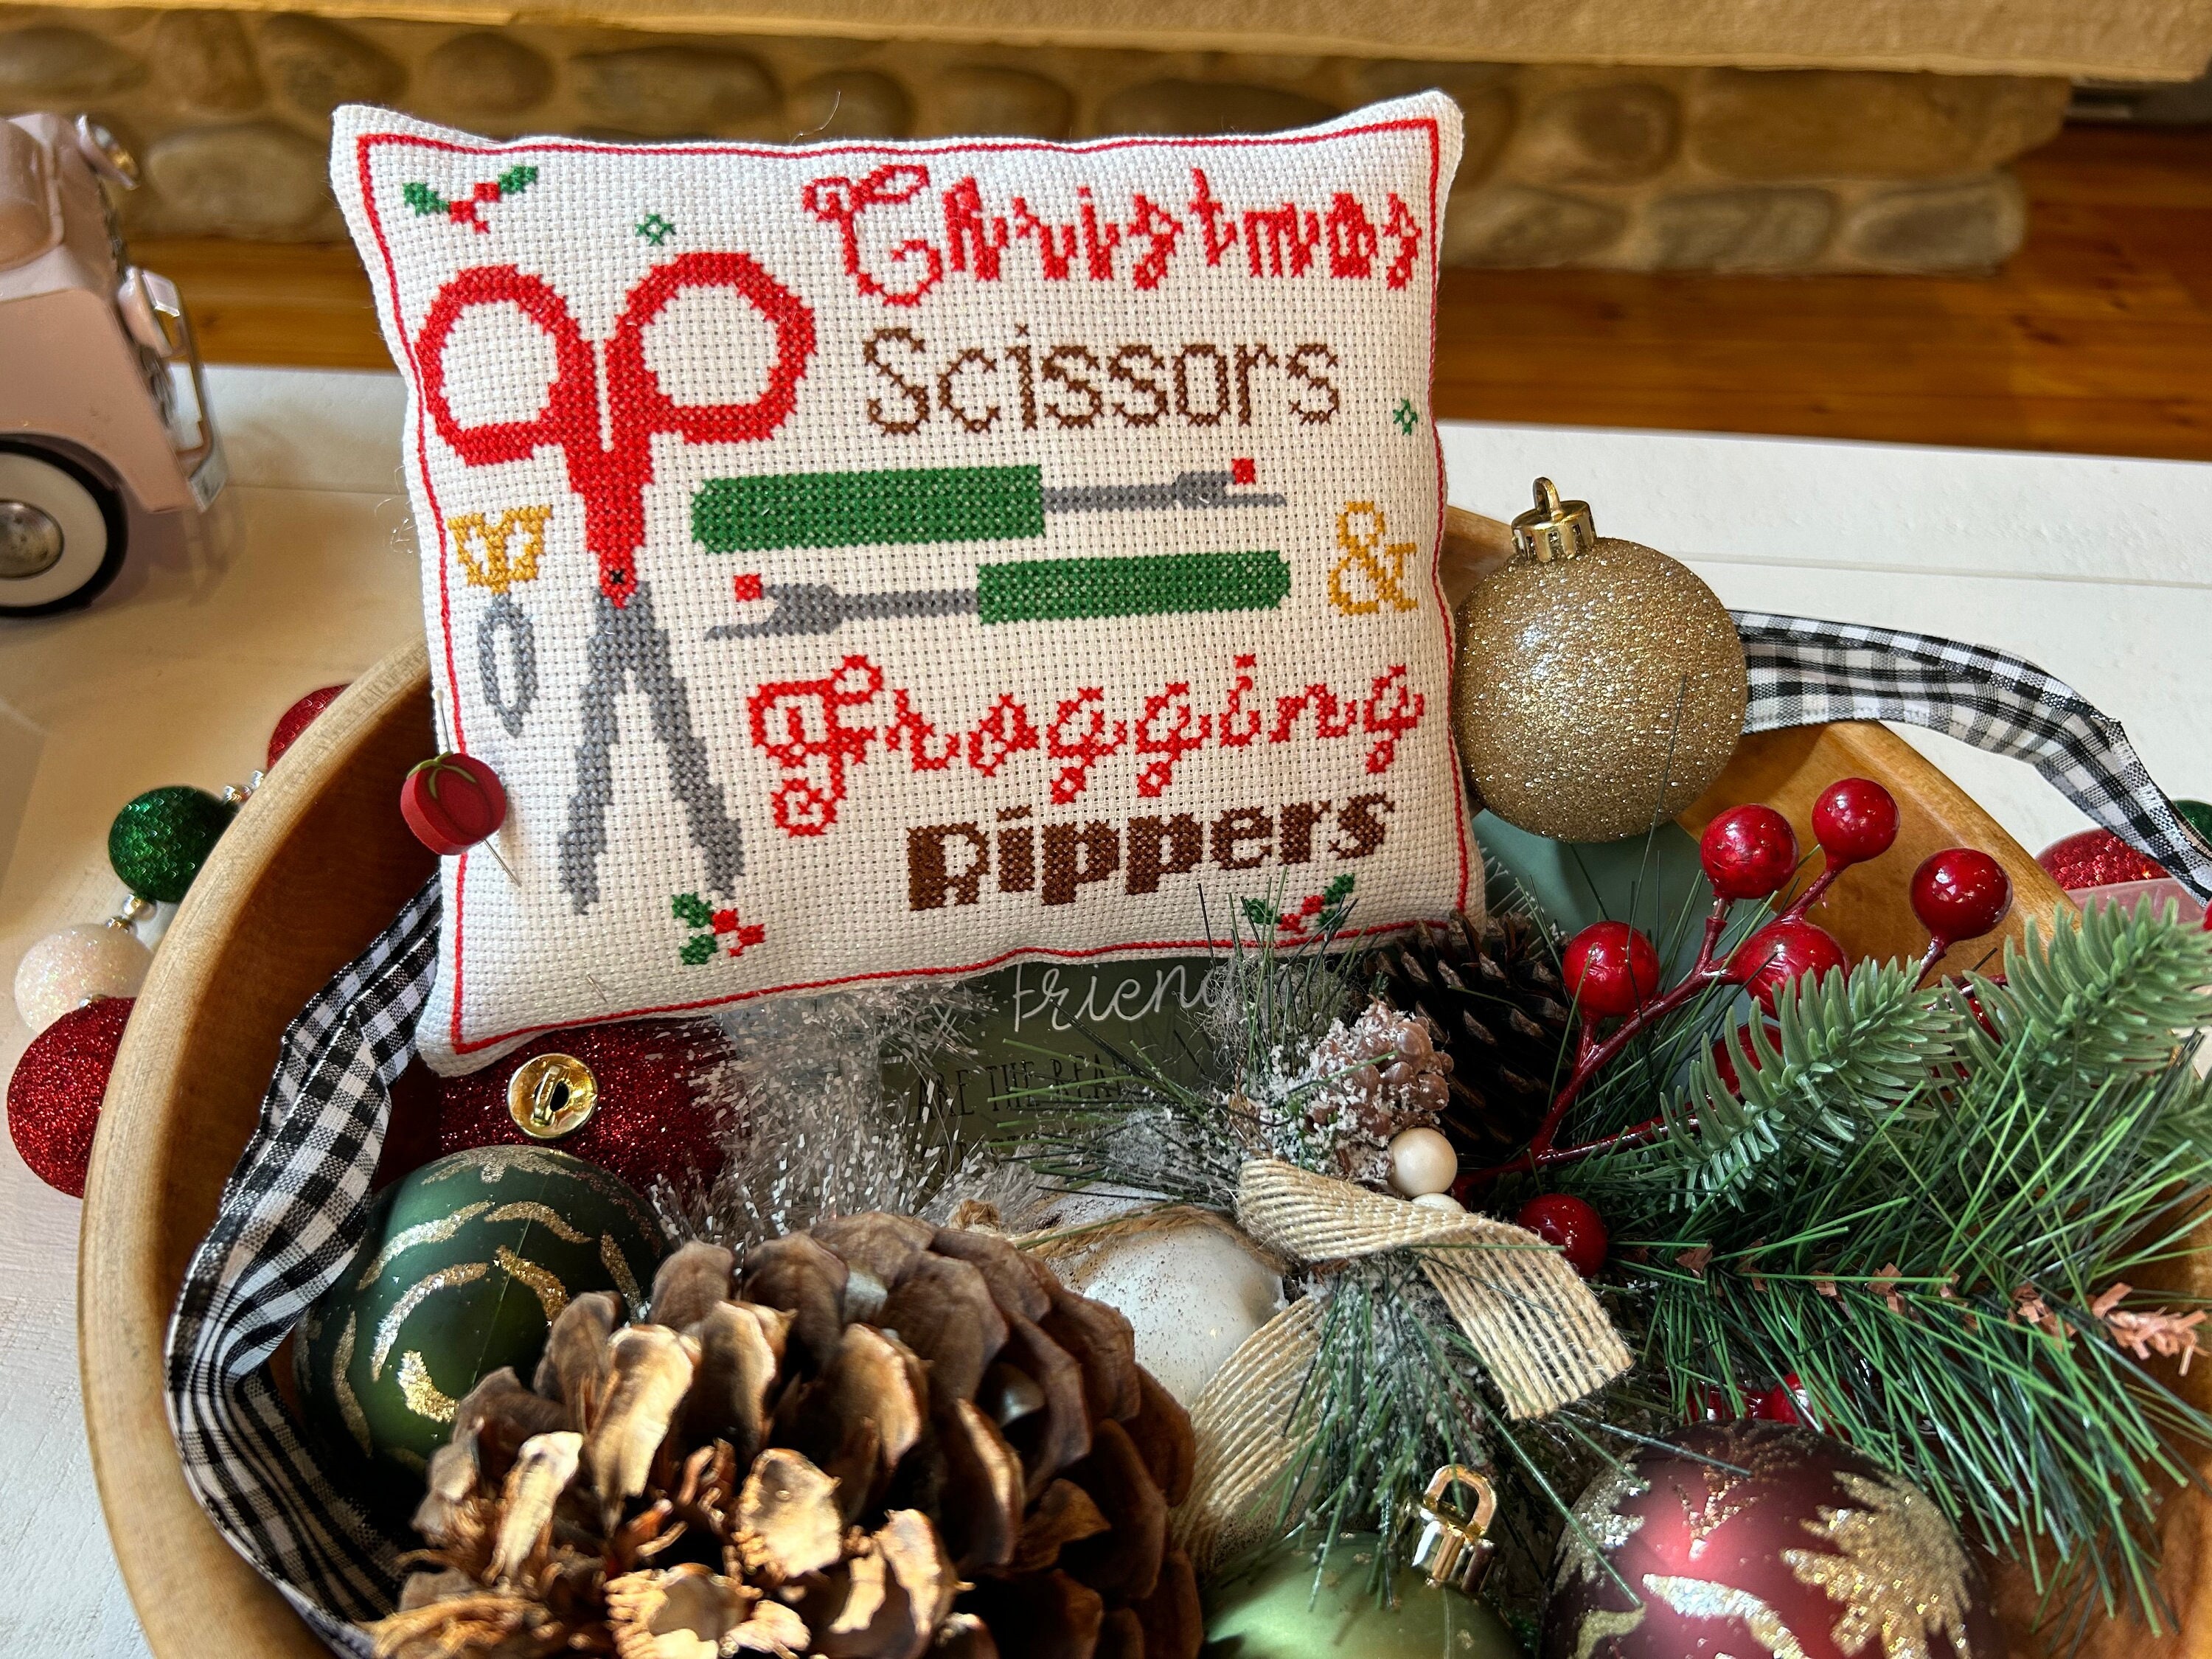 Christmas Scissors & FroggingRippers